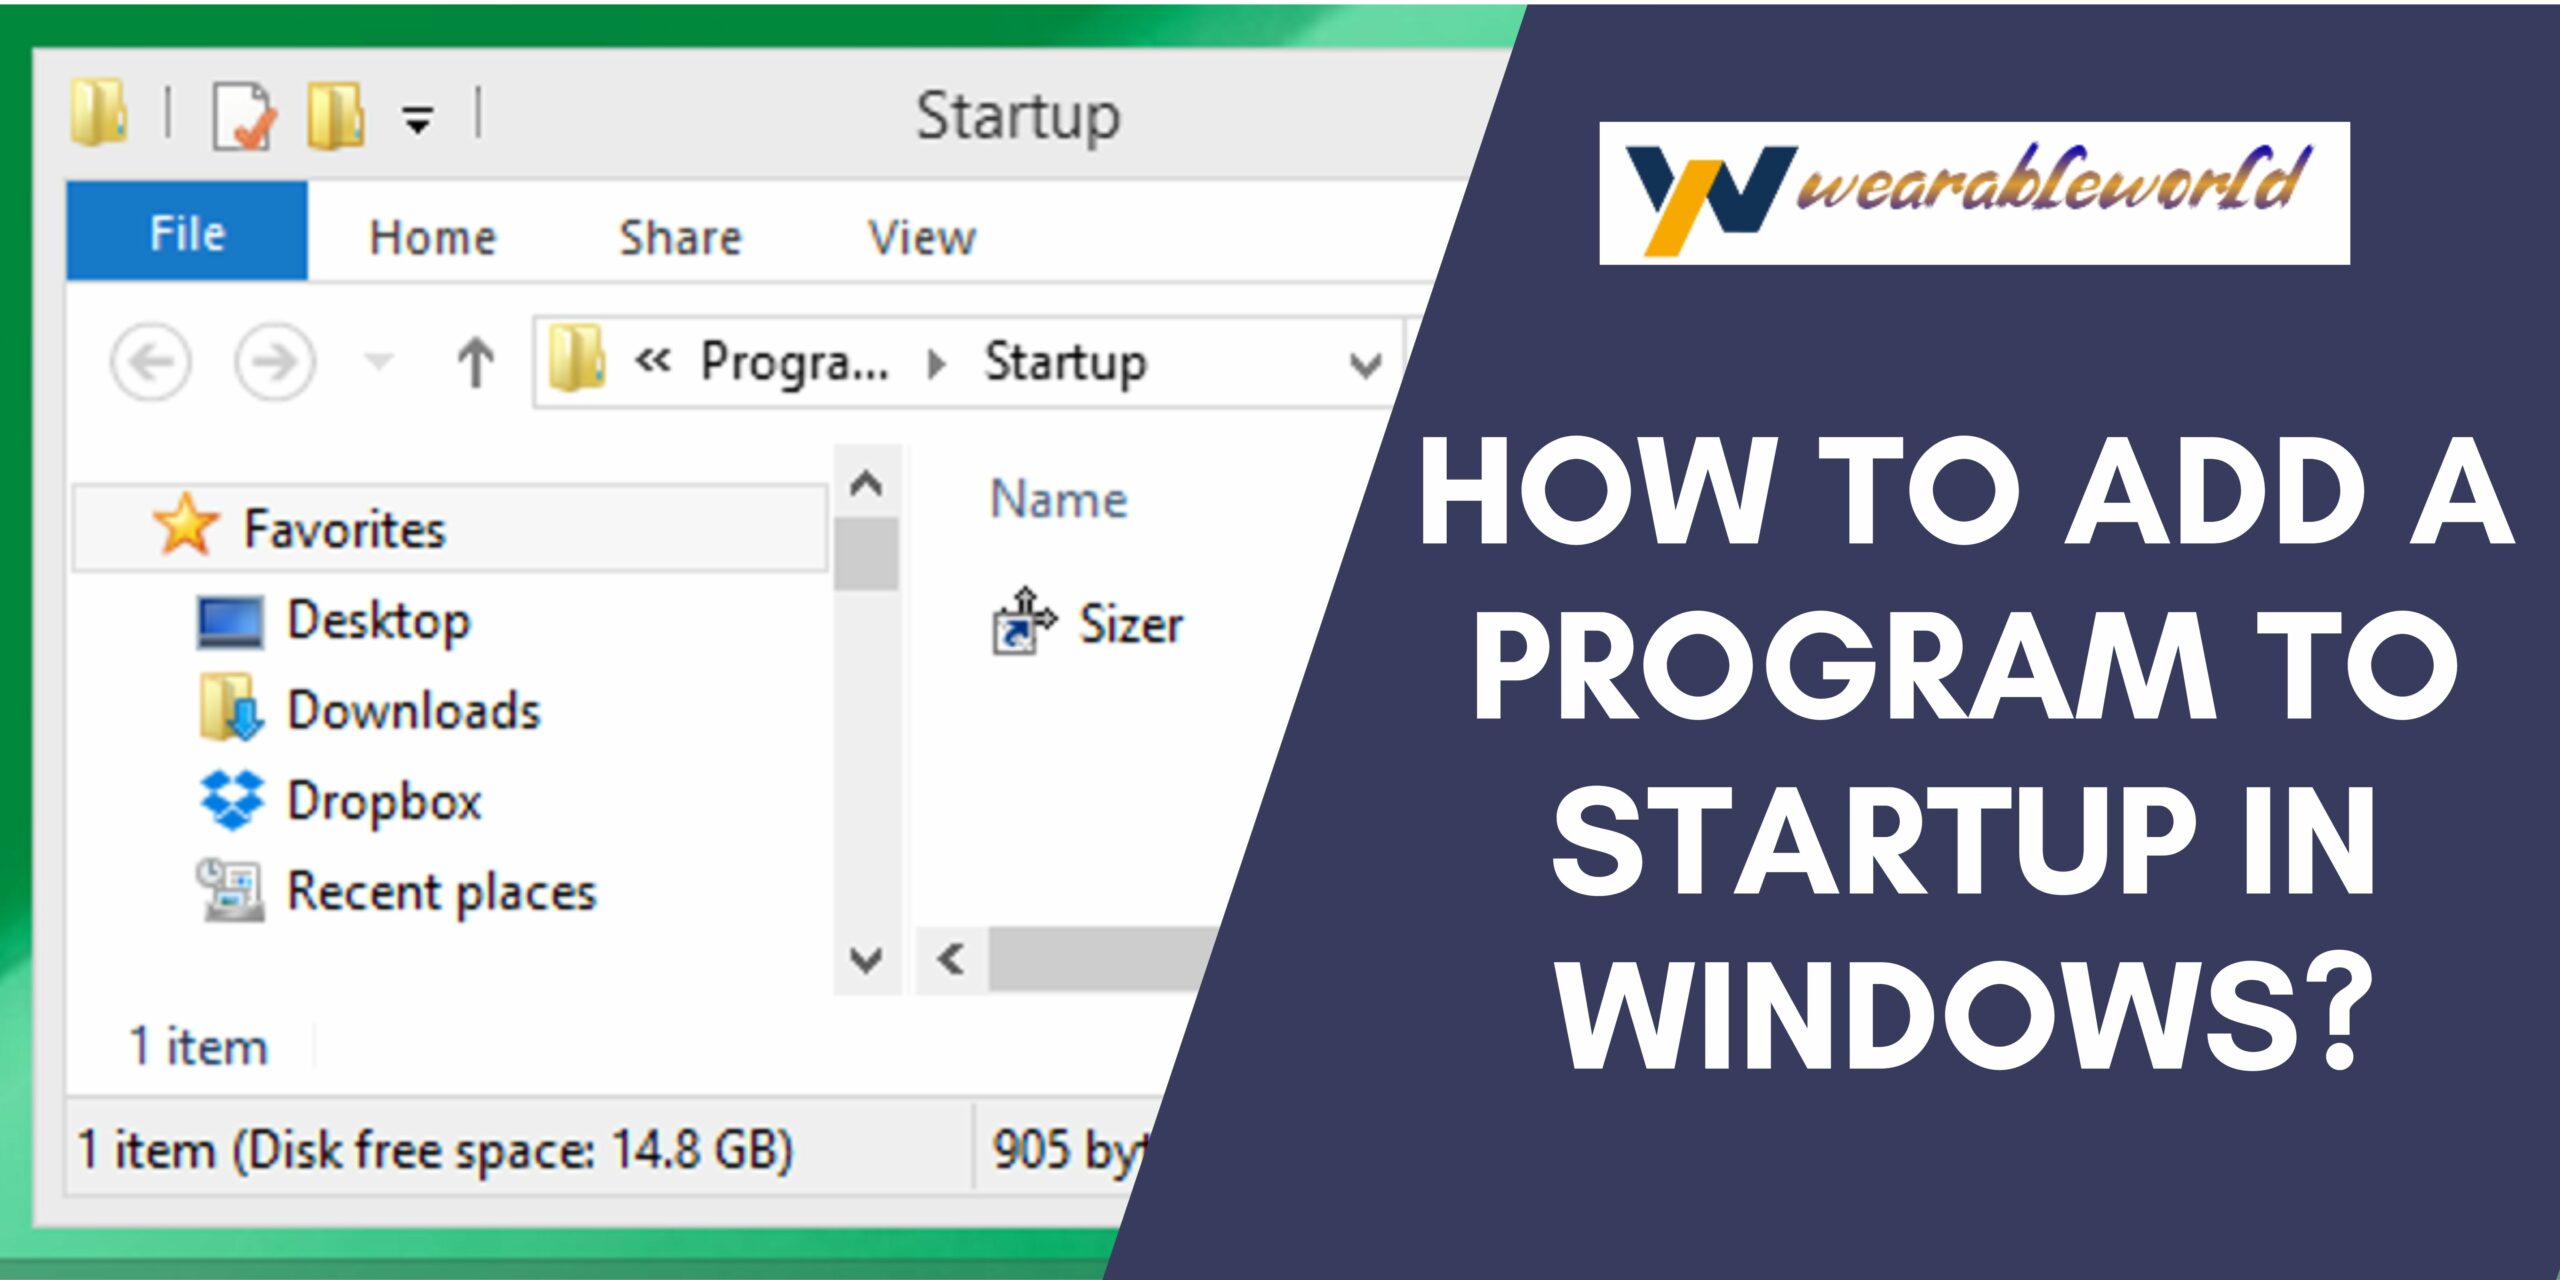 Add a program to startup in Windows